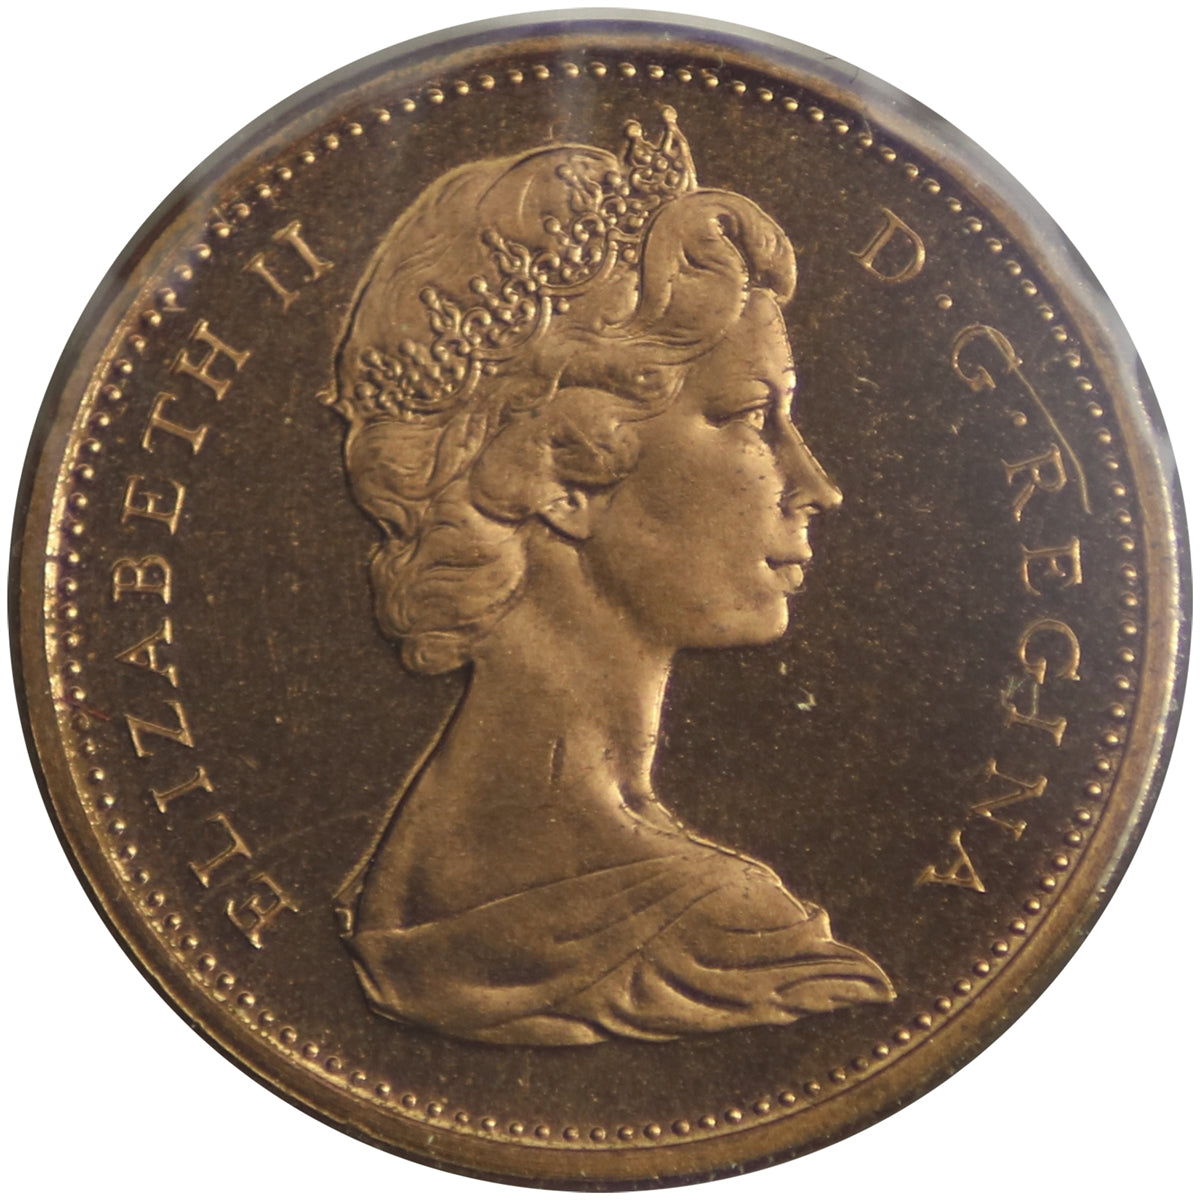 1965 Var. 2 Canada 1-cent Proof Like (SB, B5)